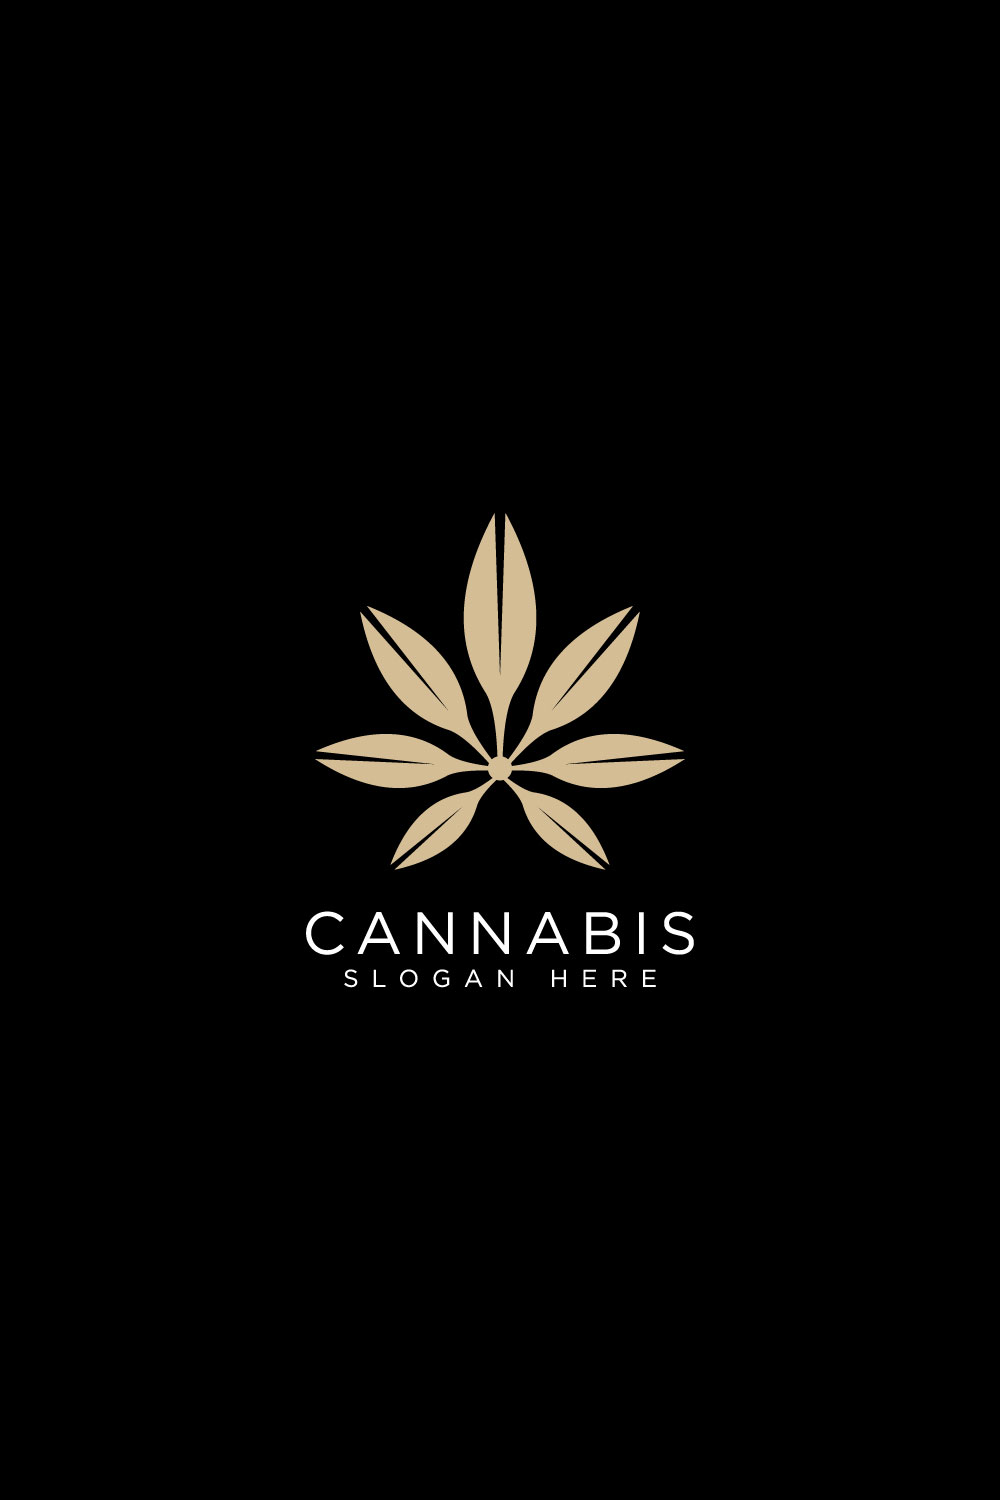 cannabis logo design vector pinterest preview image.